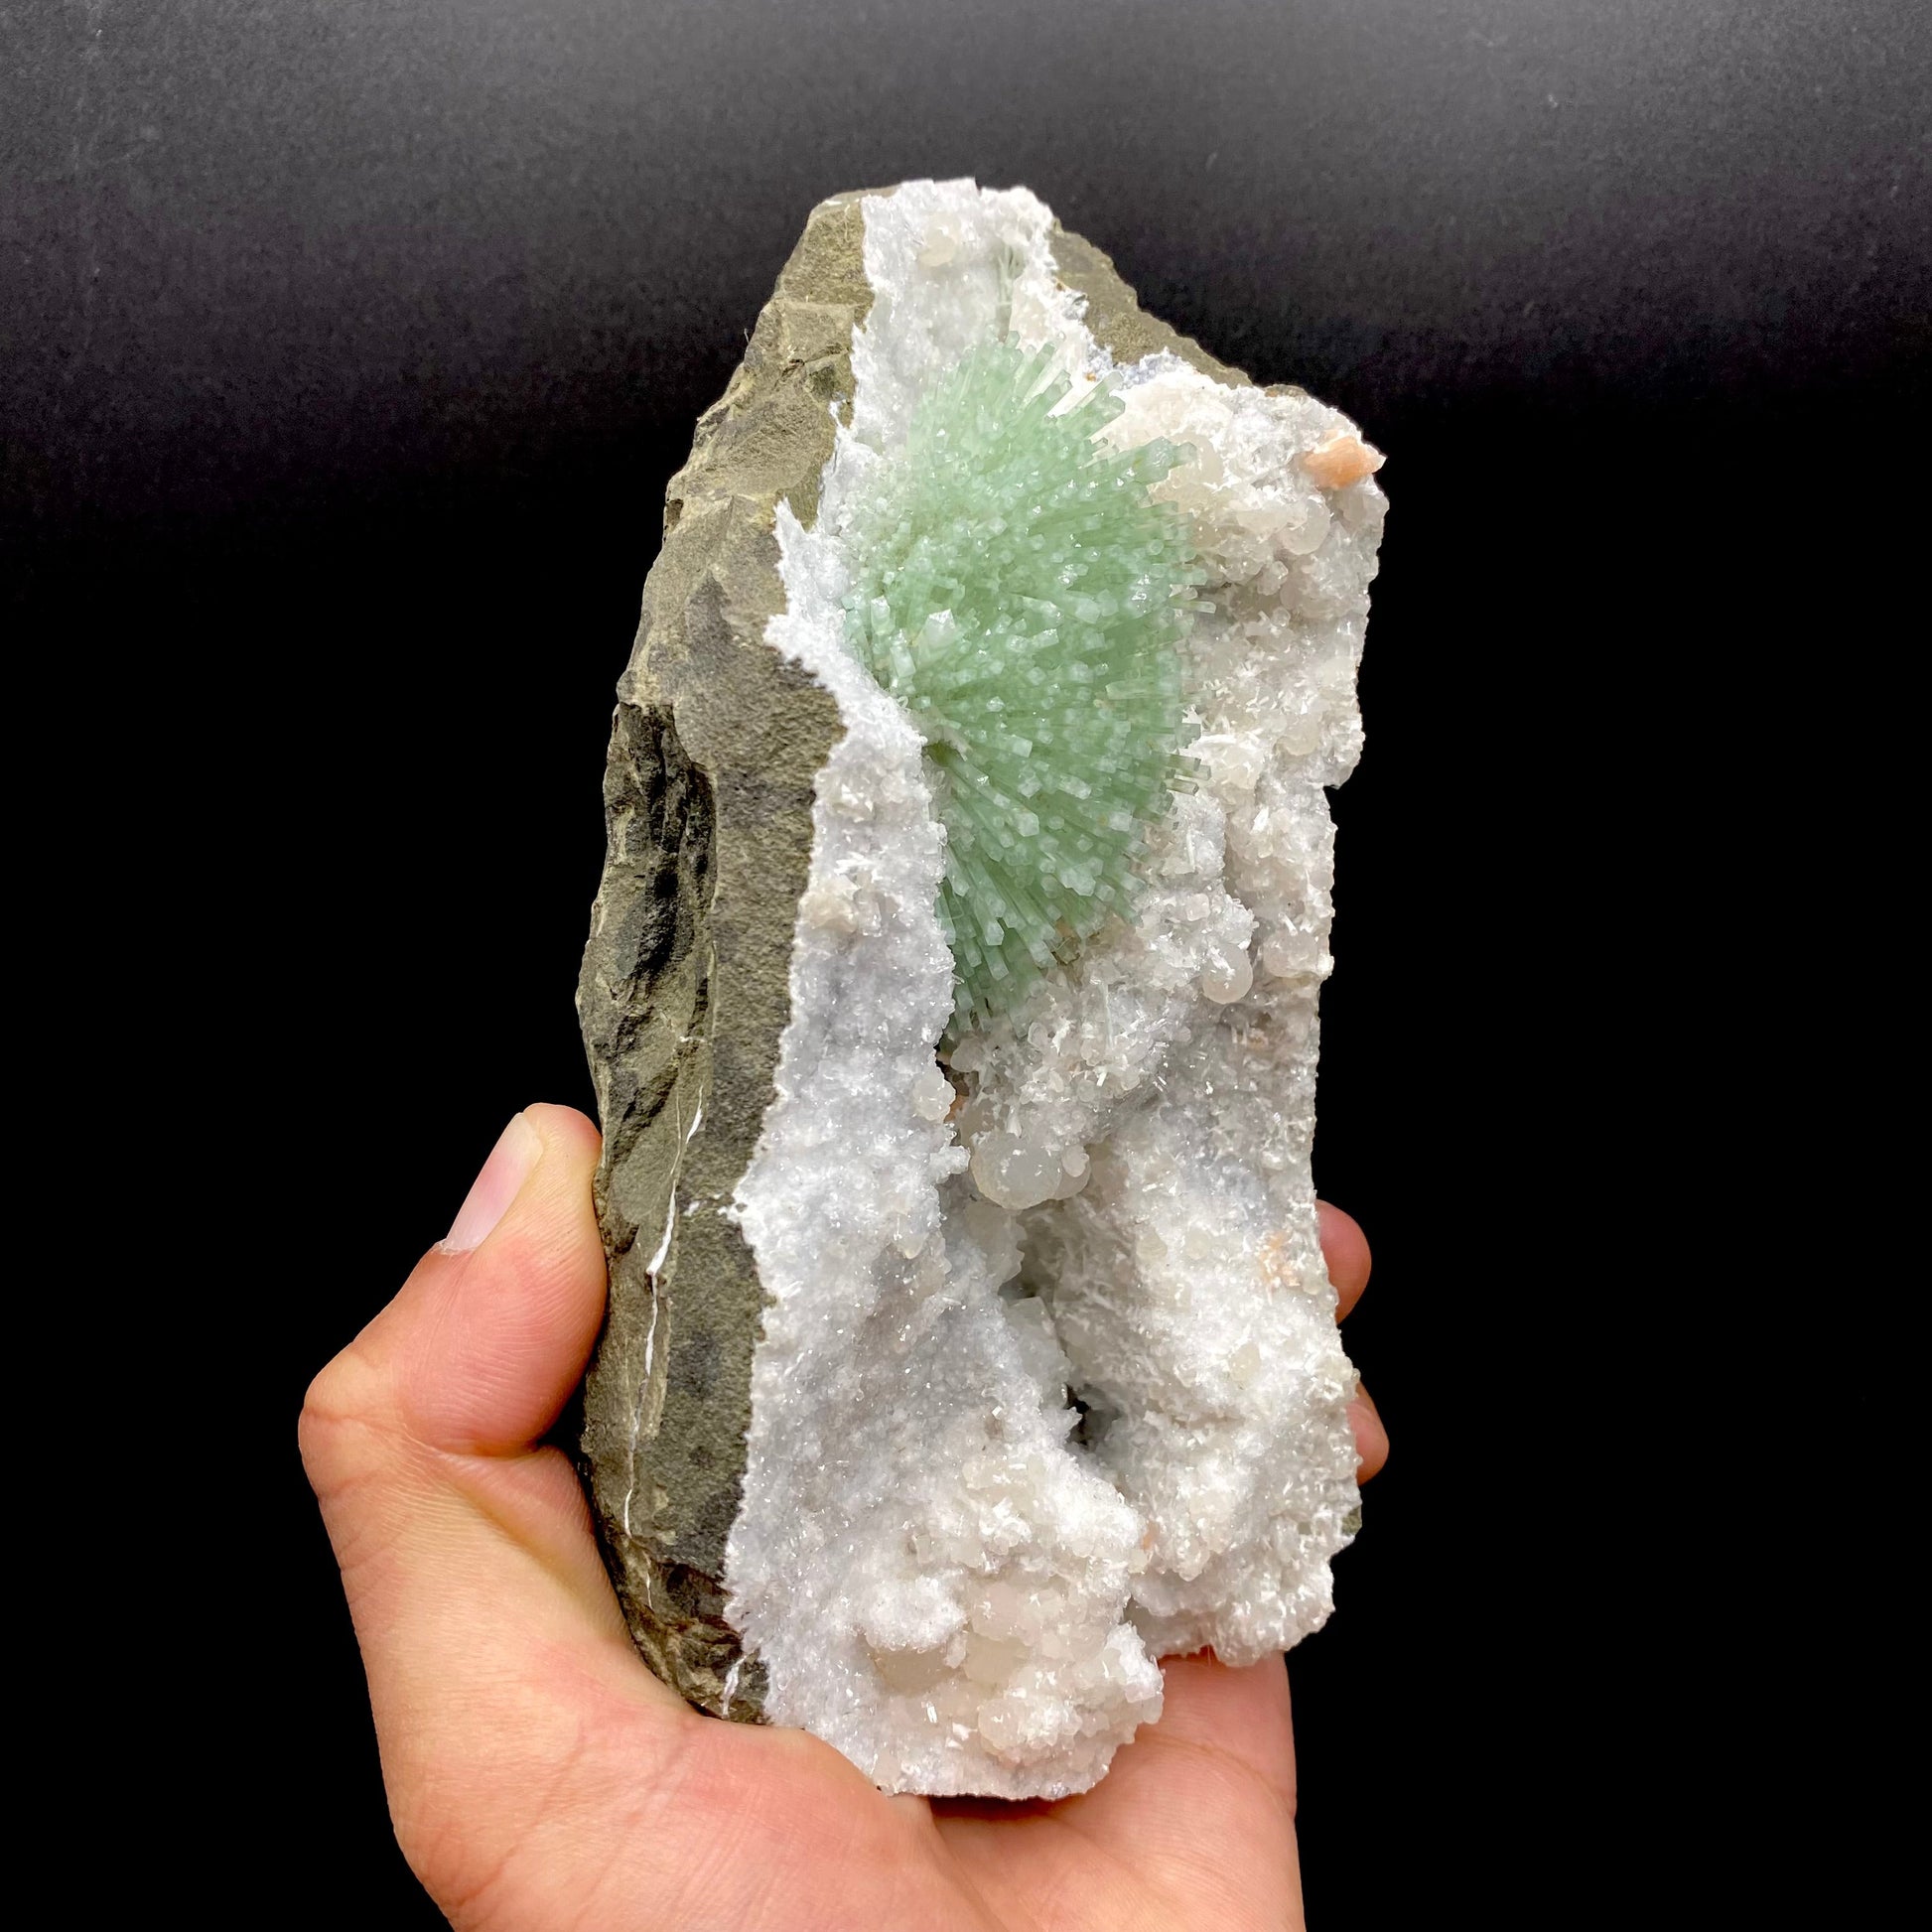 Green natrolite needle-like prisms radiate out of a millimeter quartz matrix, highly contrasted against the dark-gray basalt host rock.